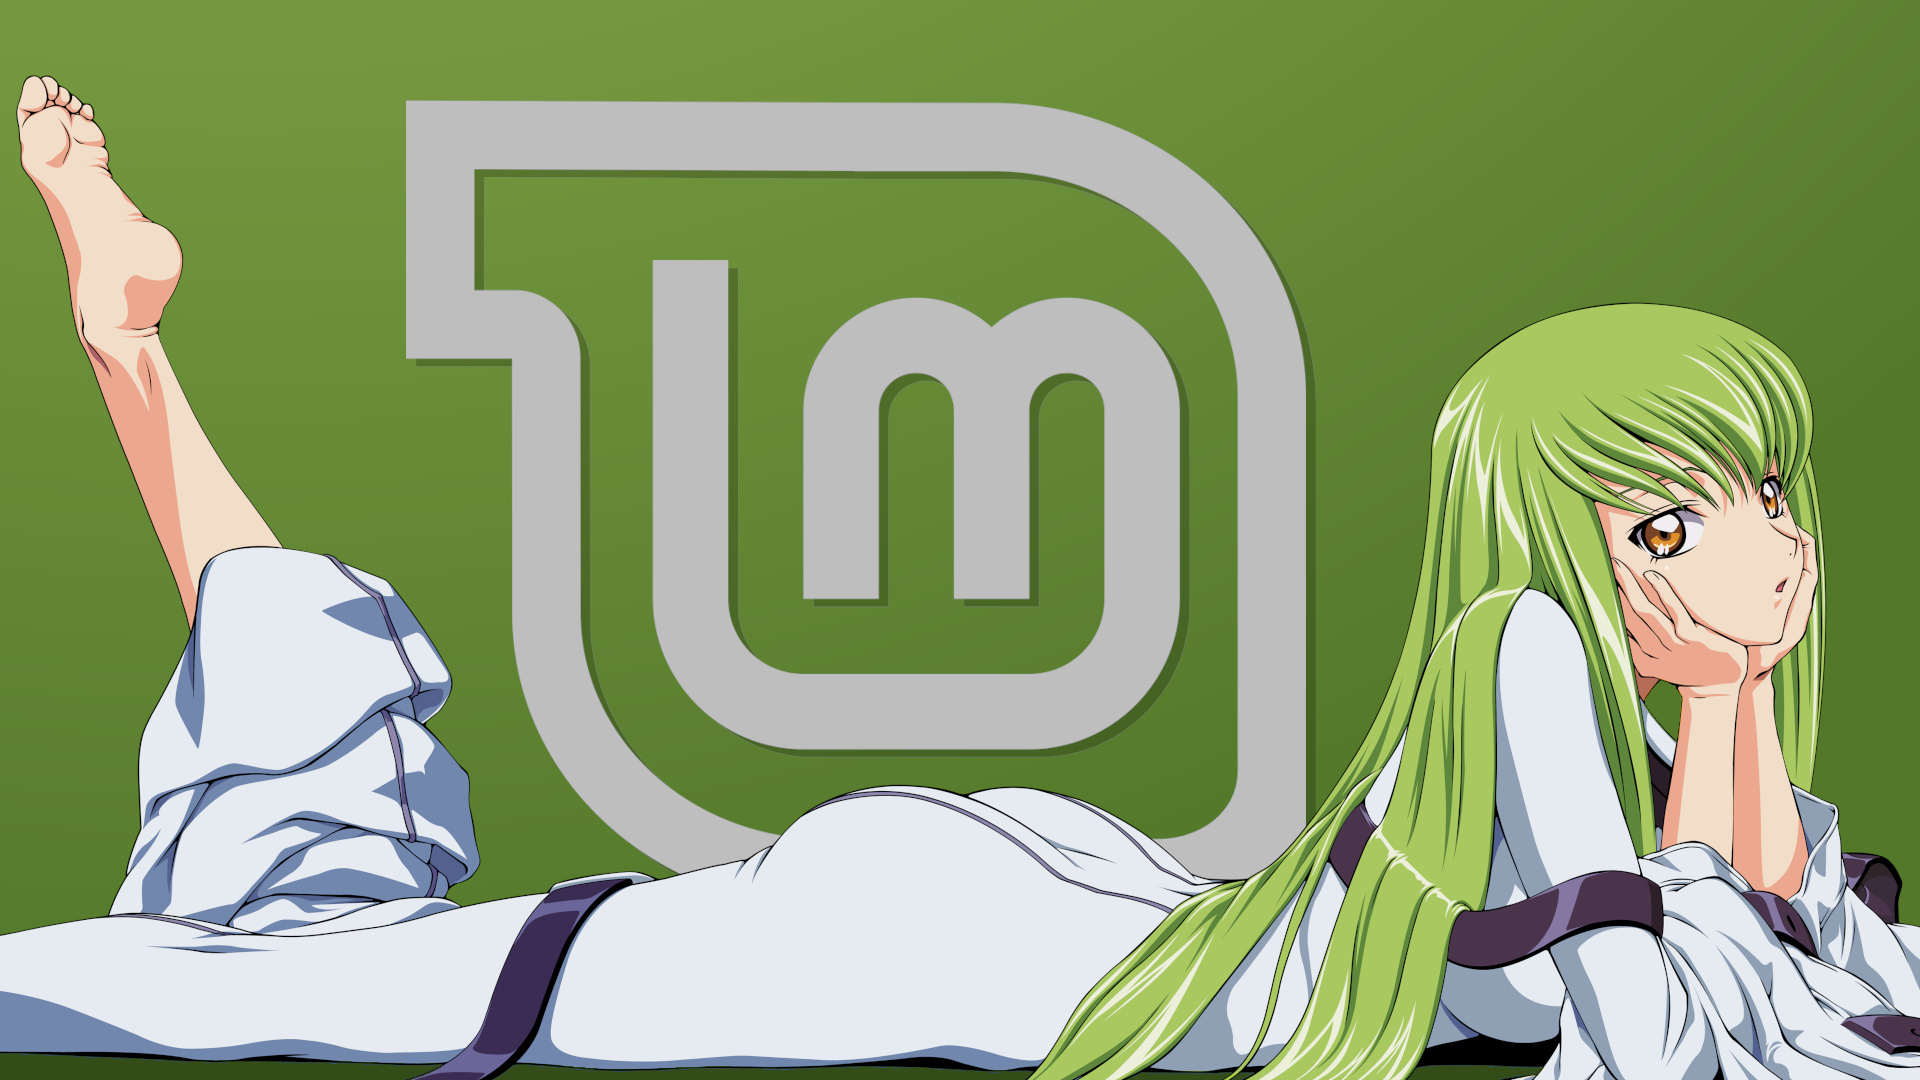 Linux Linux Mint Green Hair Looking At Viewer Green Background Lying Down C C Code Geass Code Geass 1920x1080